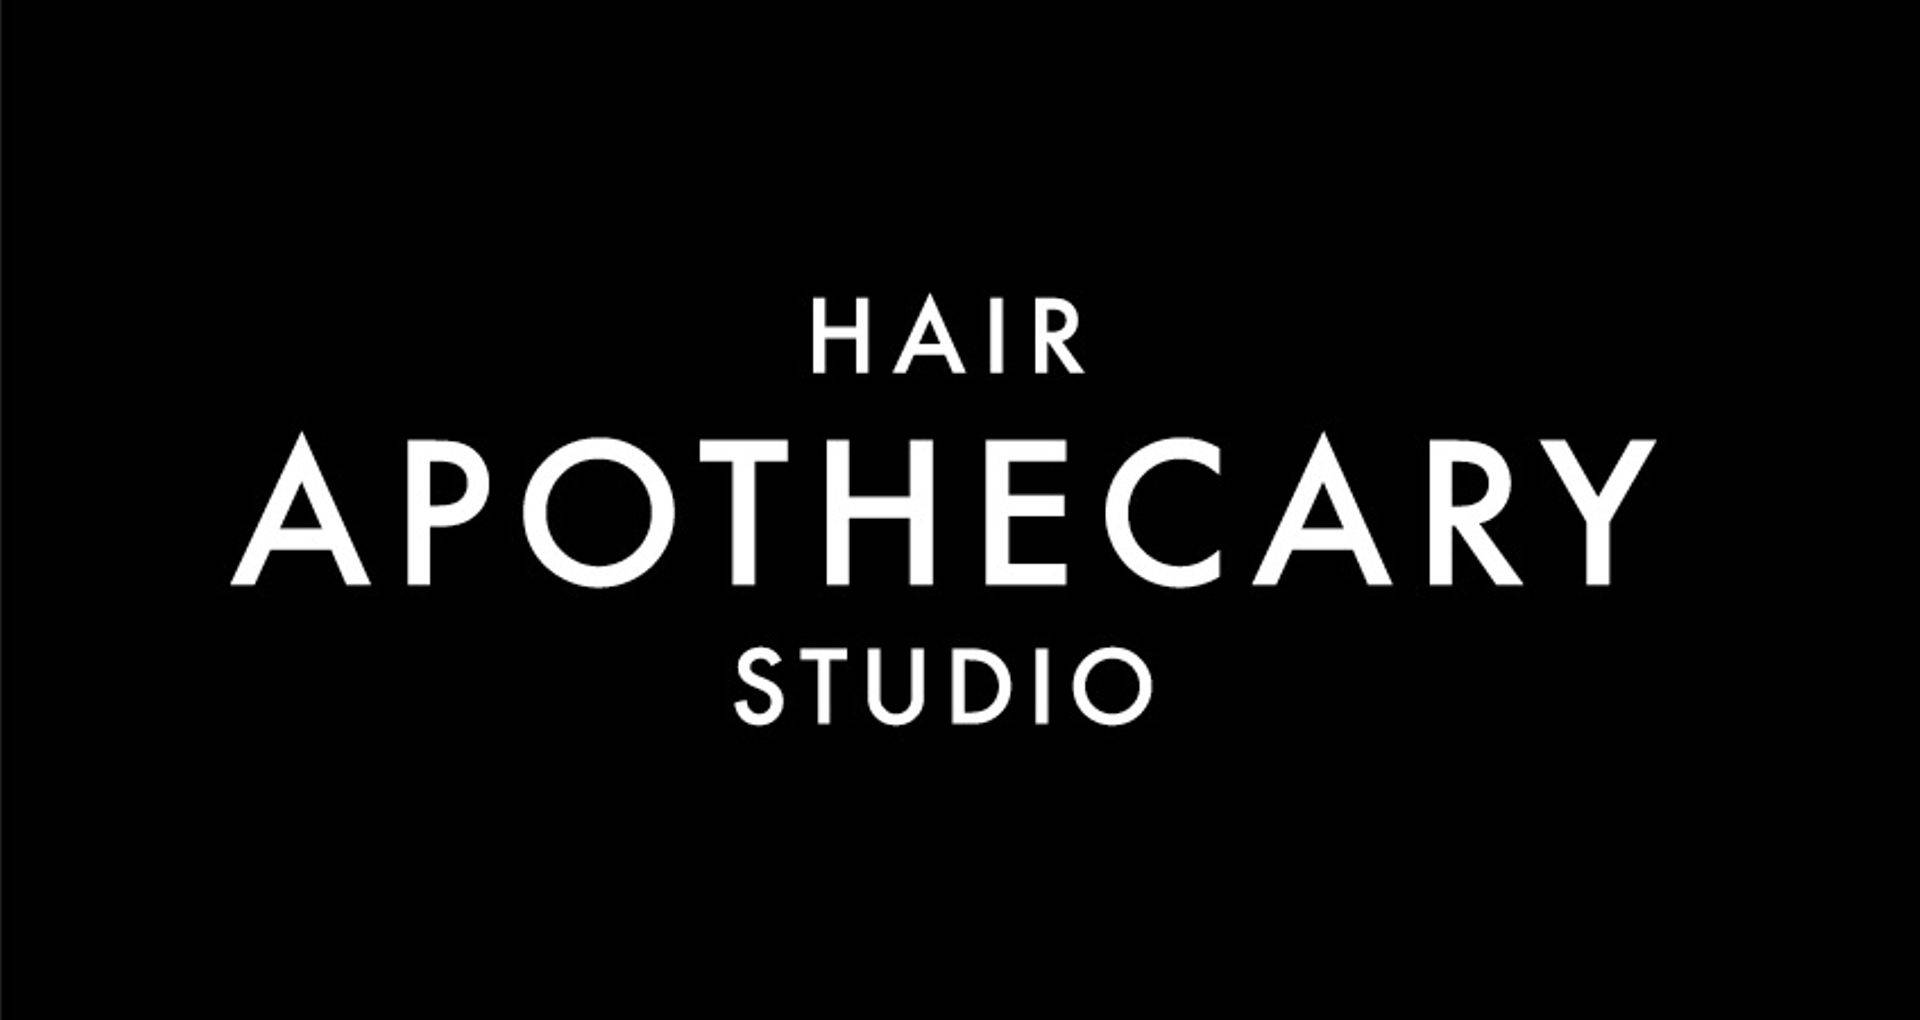 Hair Apothecary Studio 93 Bruce St S, Thornbury Ontario N0H 2P0